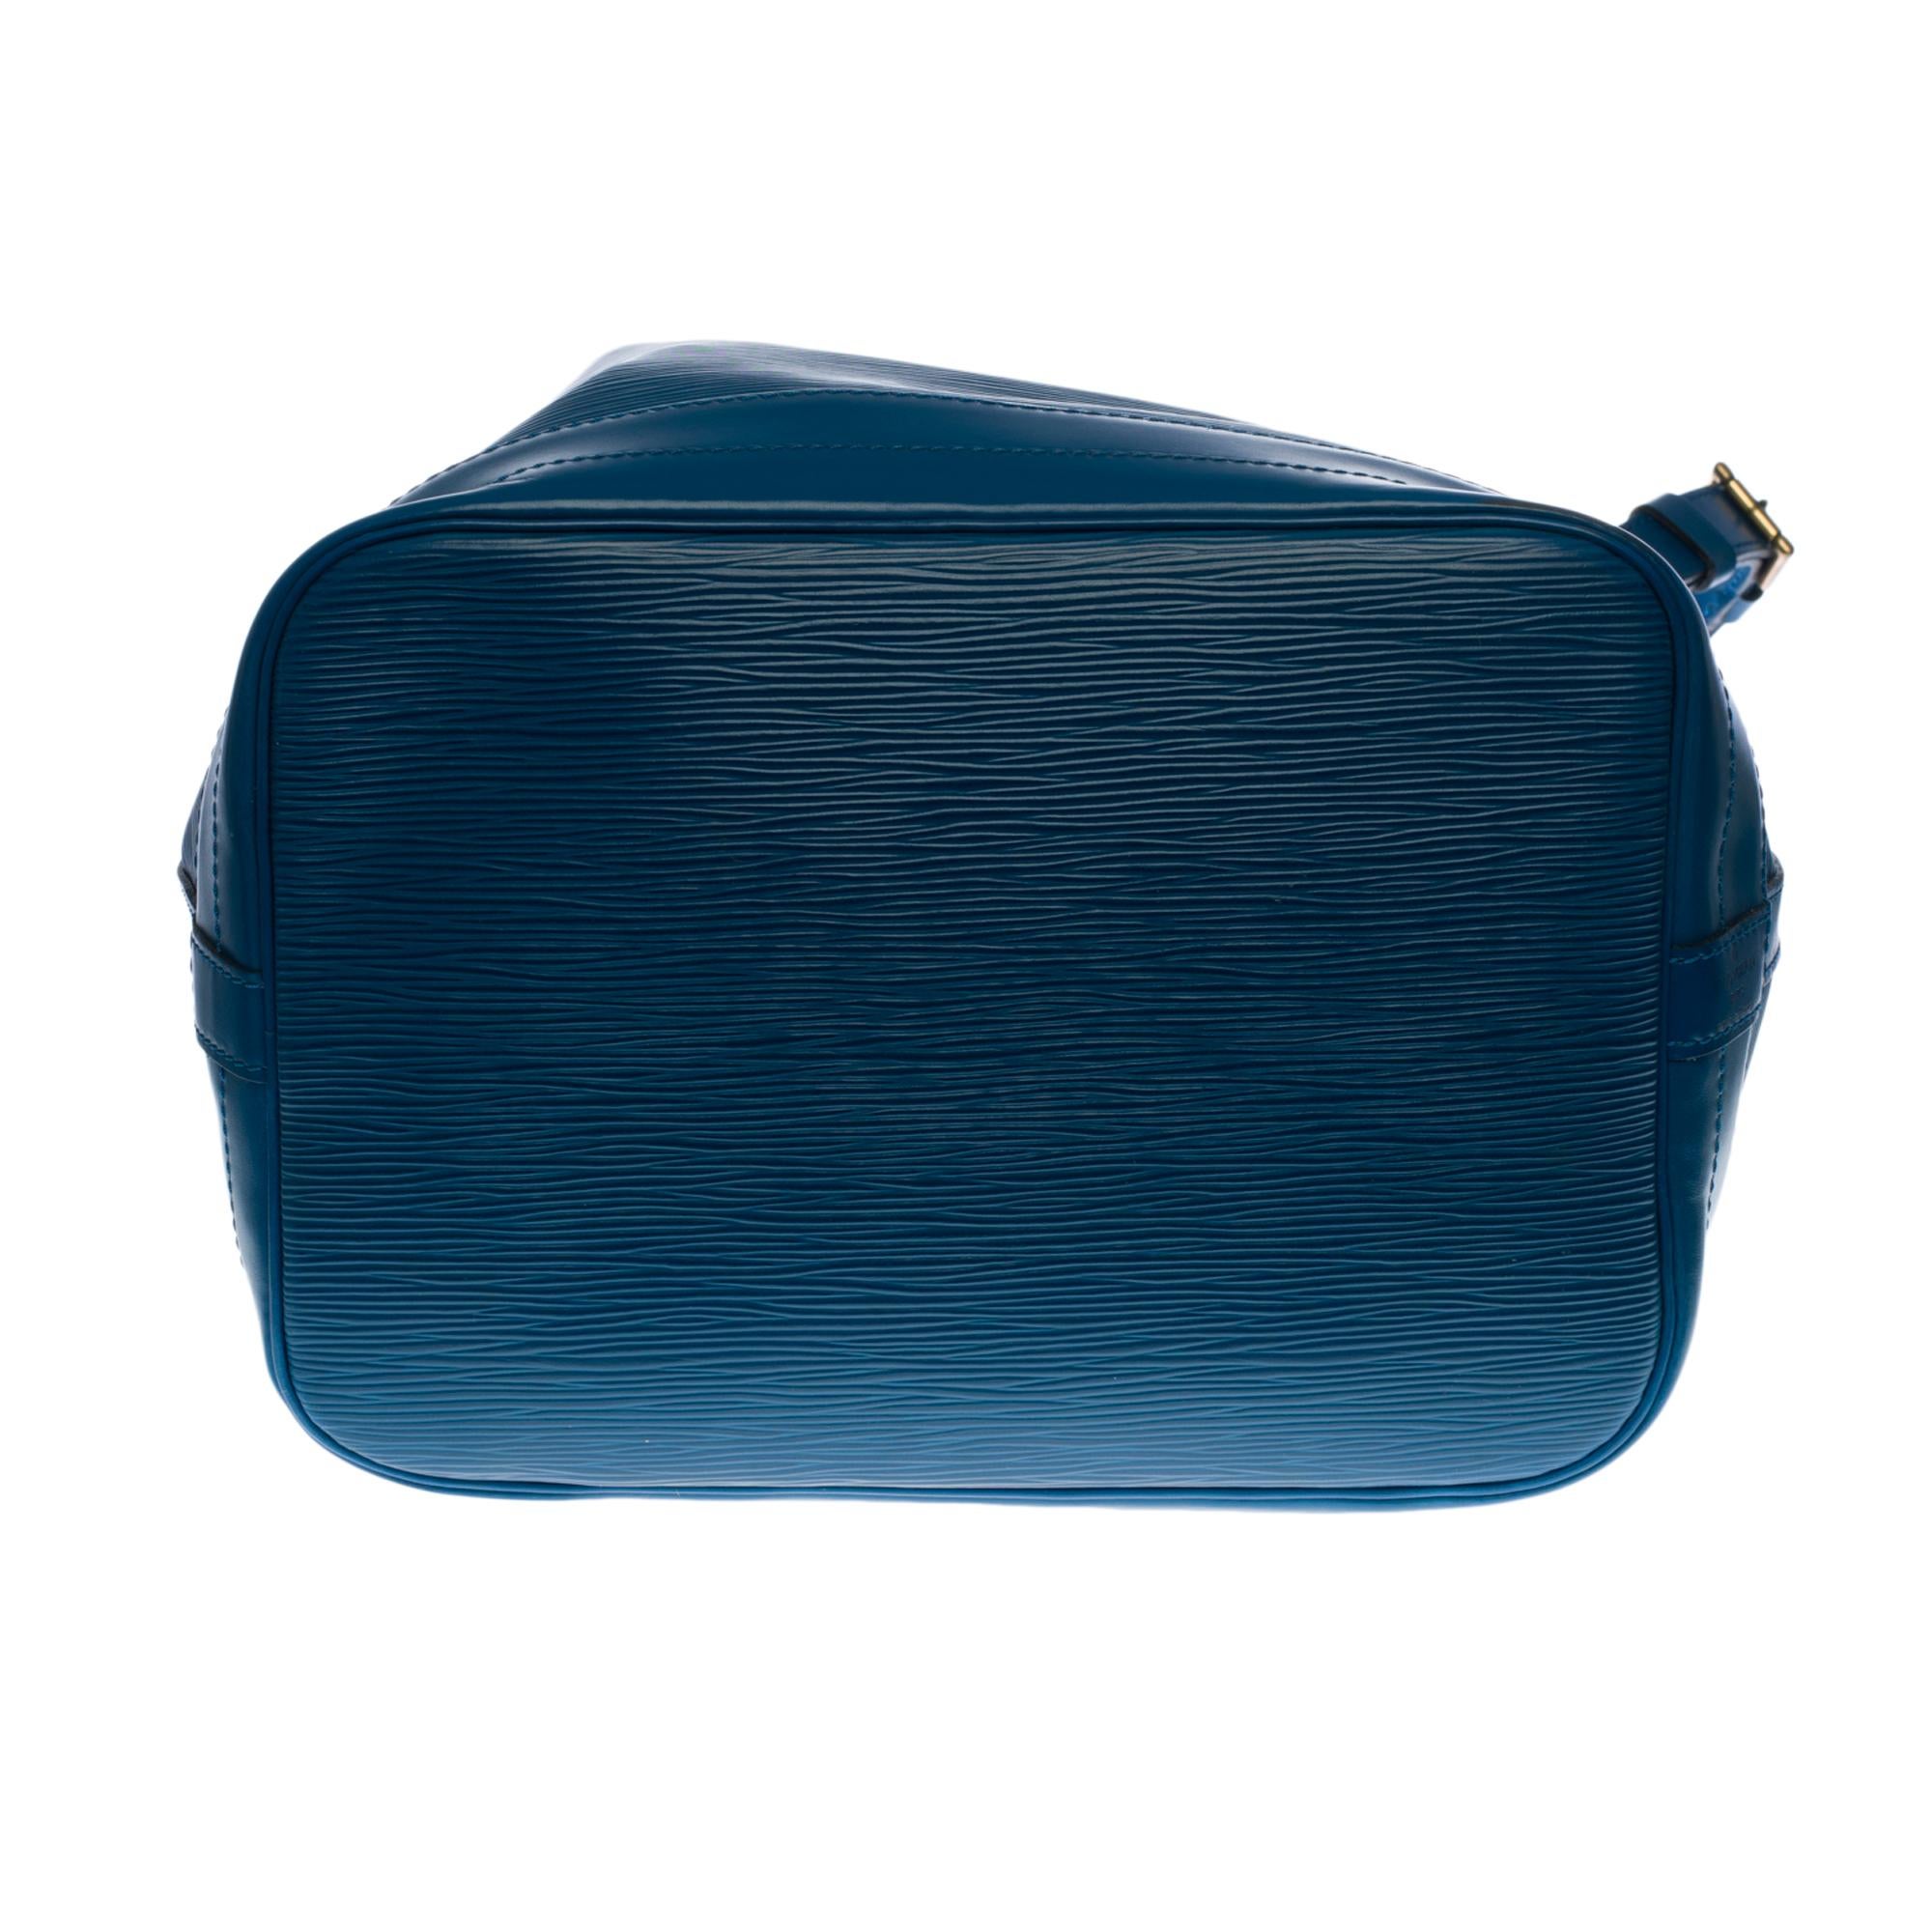 Louis Vuitton Noé Grand modele shoulder bag in blue epi leather with GHW 4